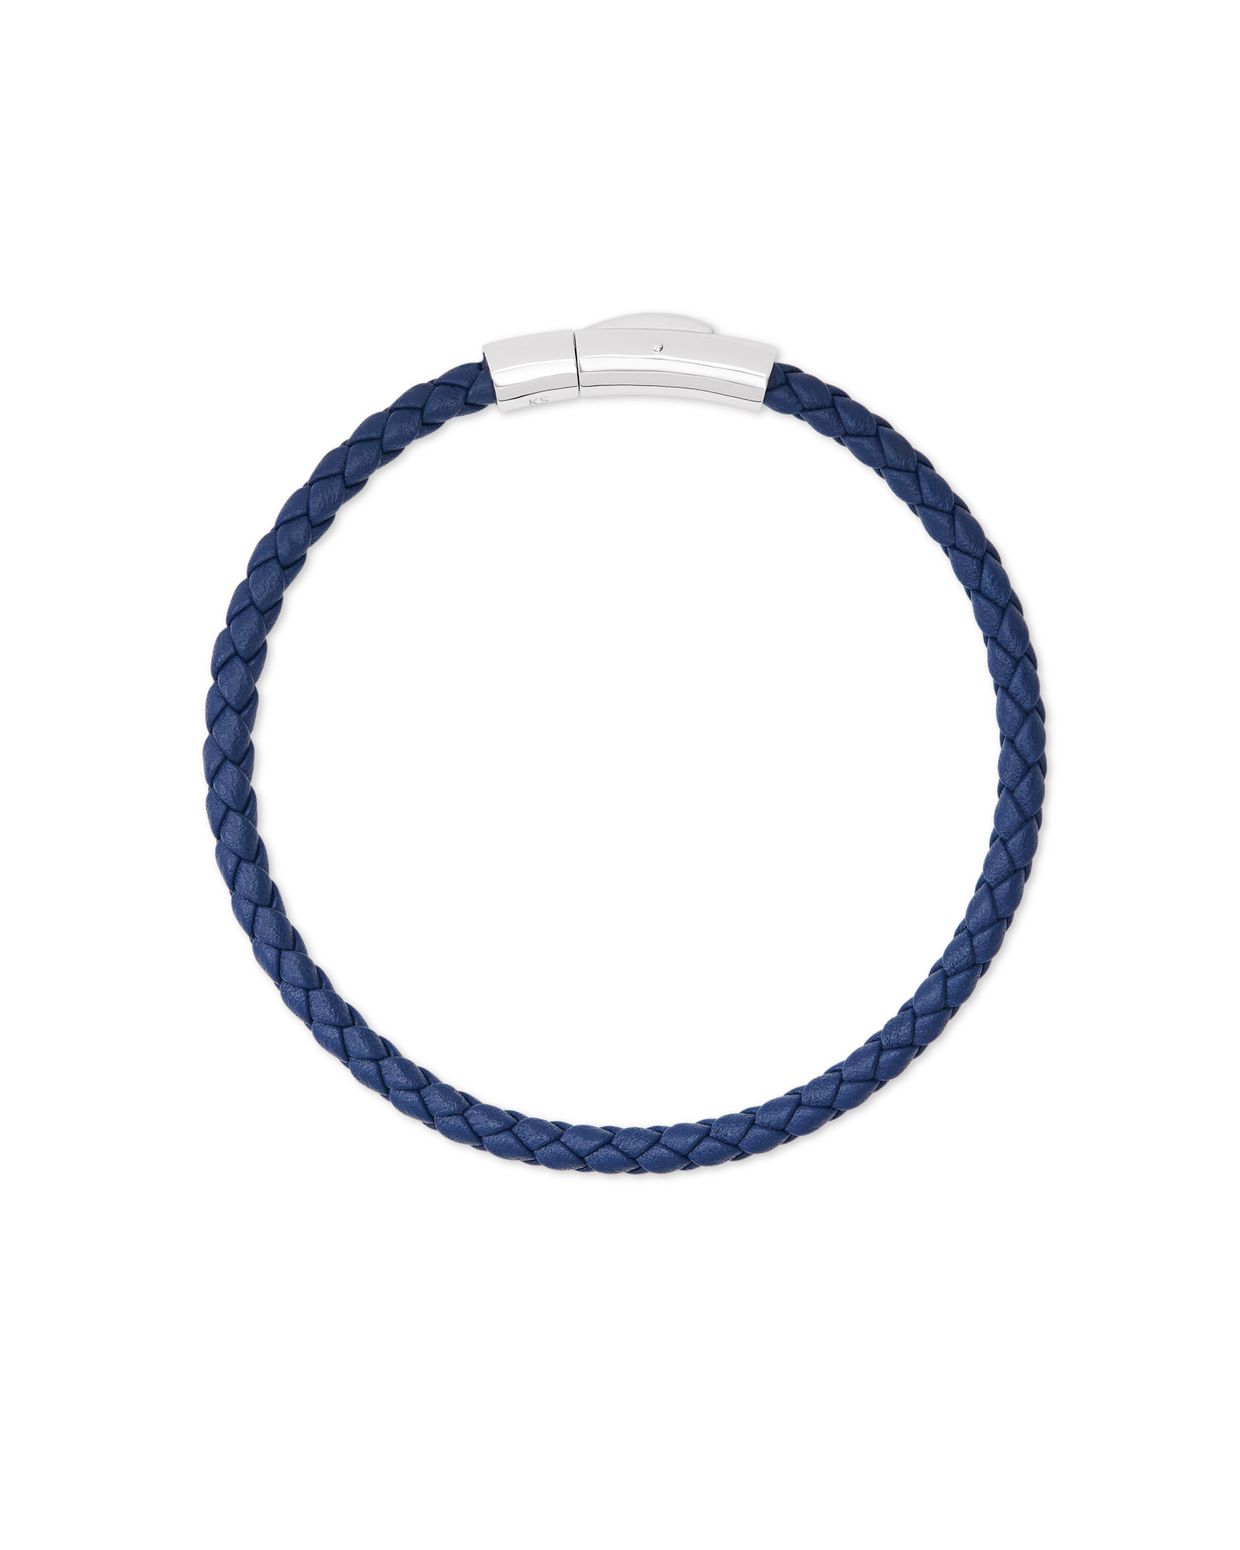 Evans Sterling Silver Corded Bracelet in Blue Leather